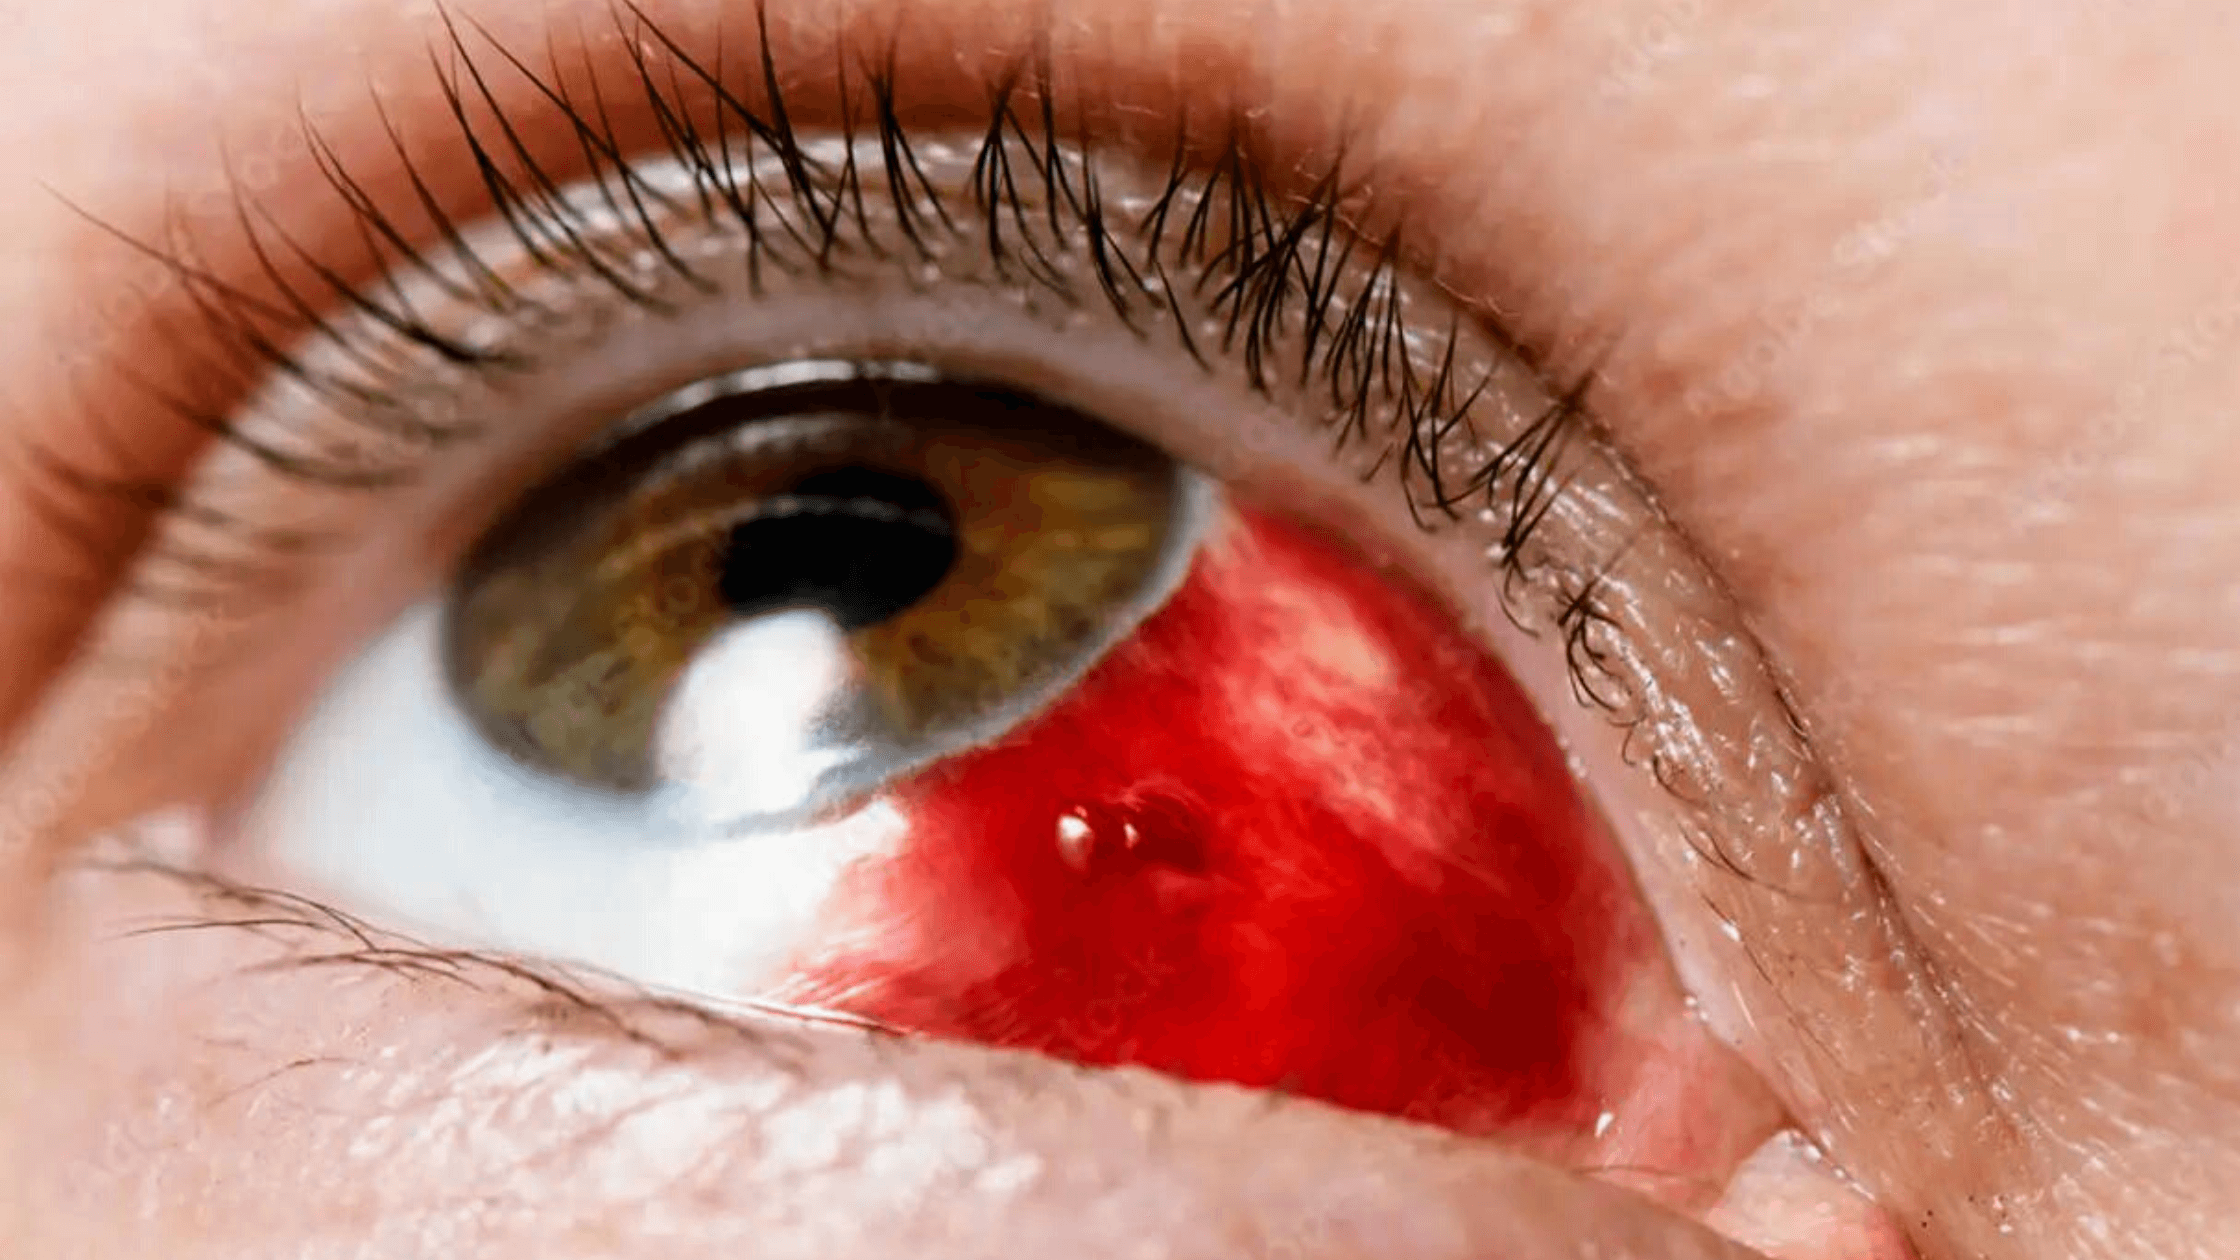 The Deadly Balkan Eye-Bleeding Virus Chance To Dying Of Spanish People